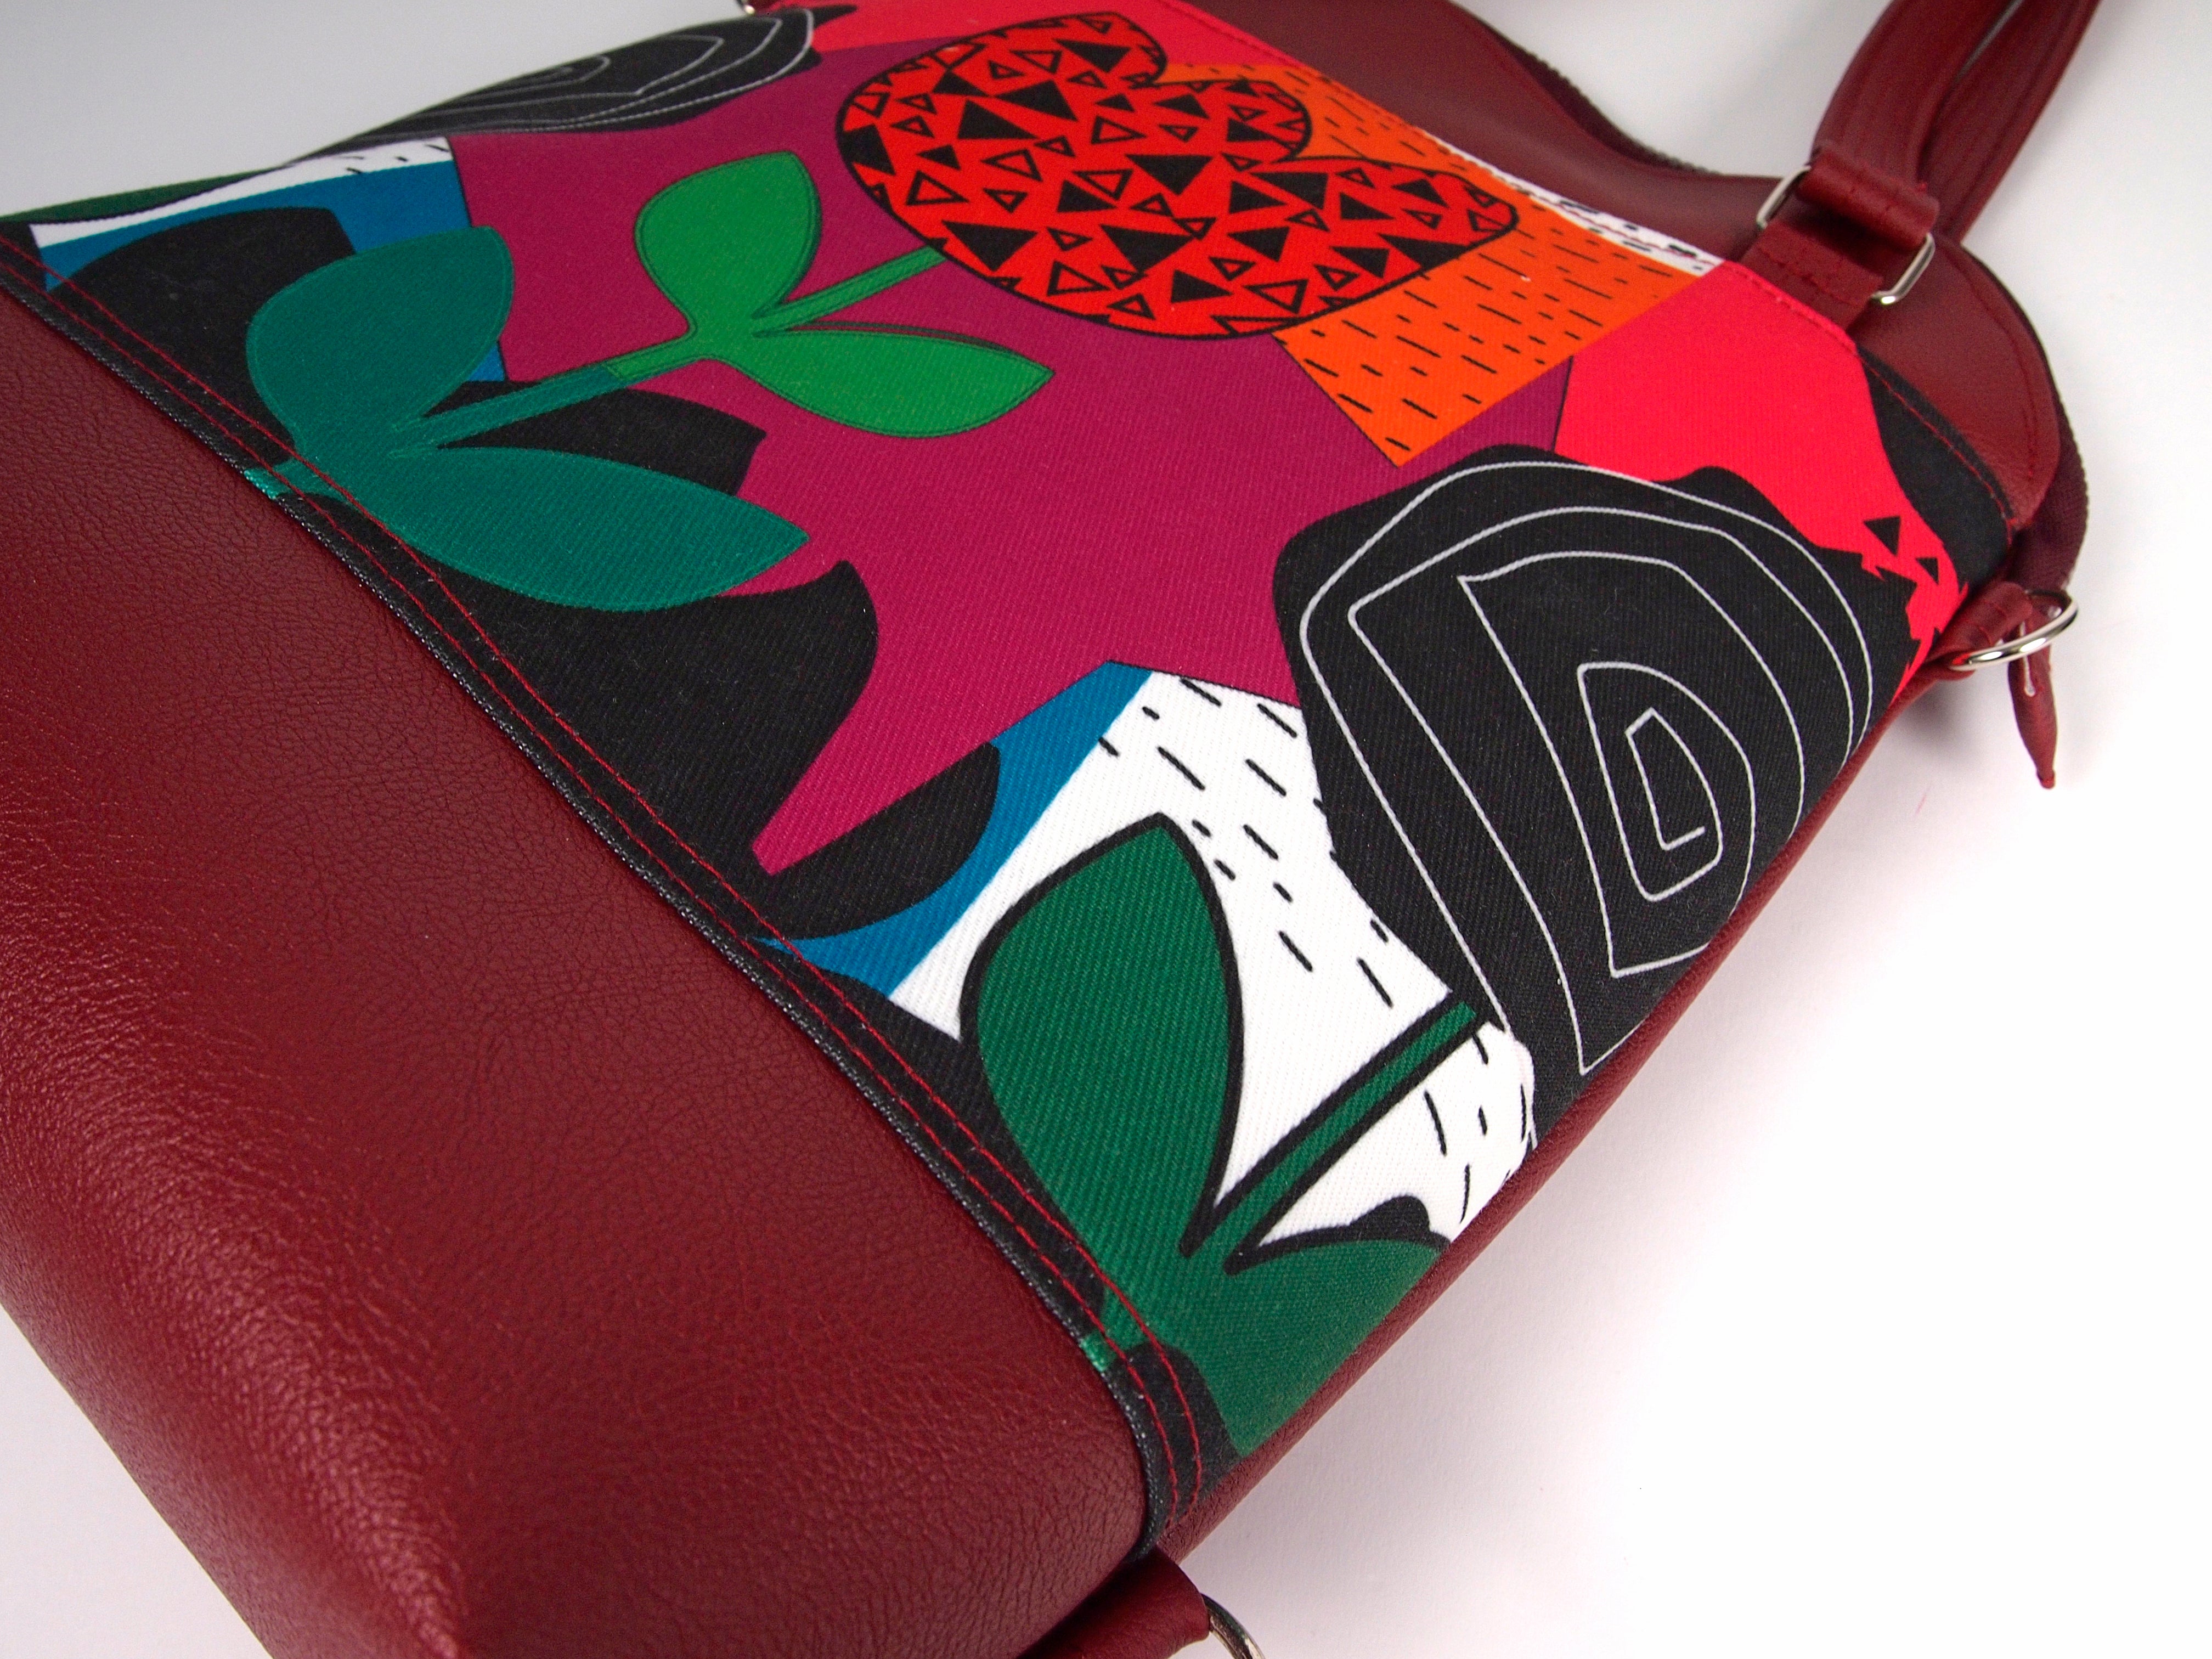 Bardo classic bag and backpack - Colorful emotion - BARDO ART WORKS